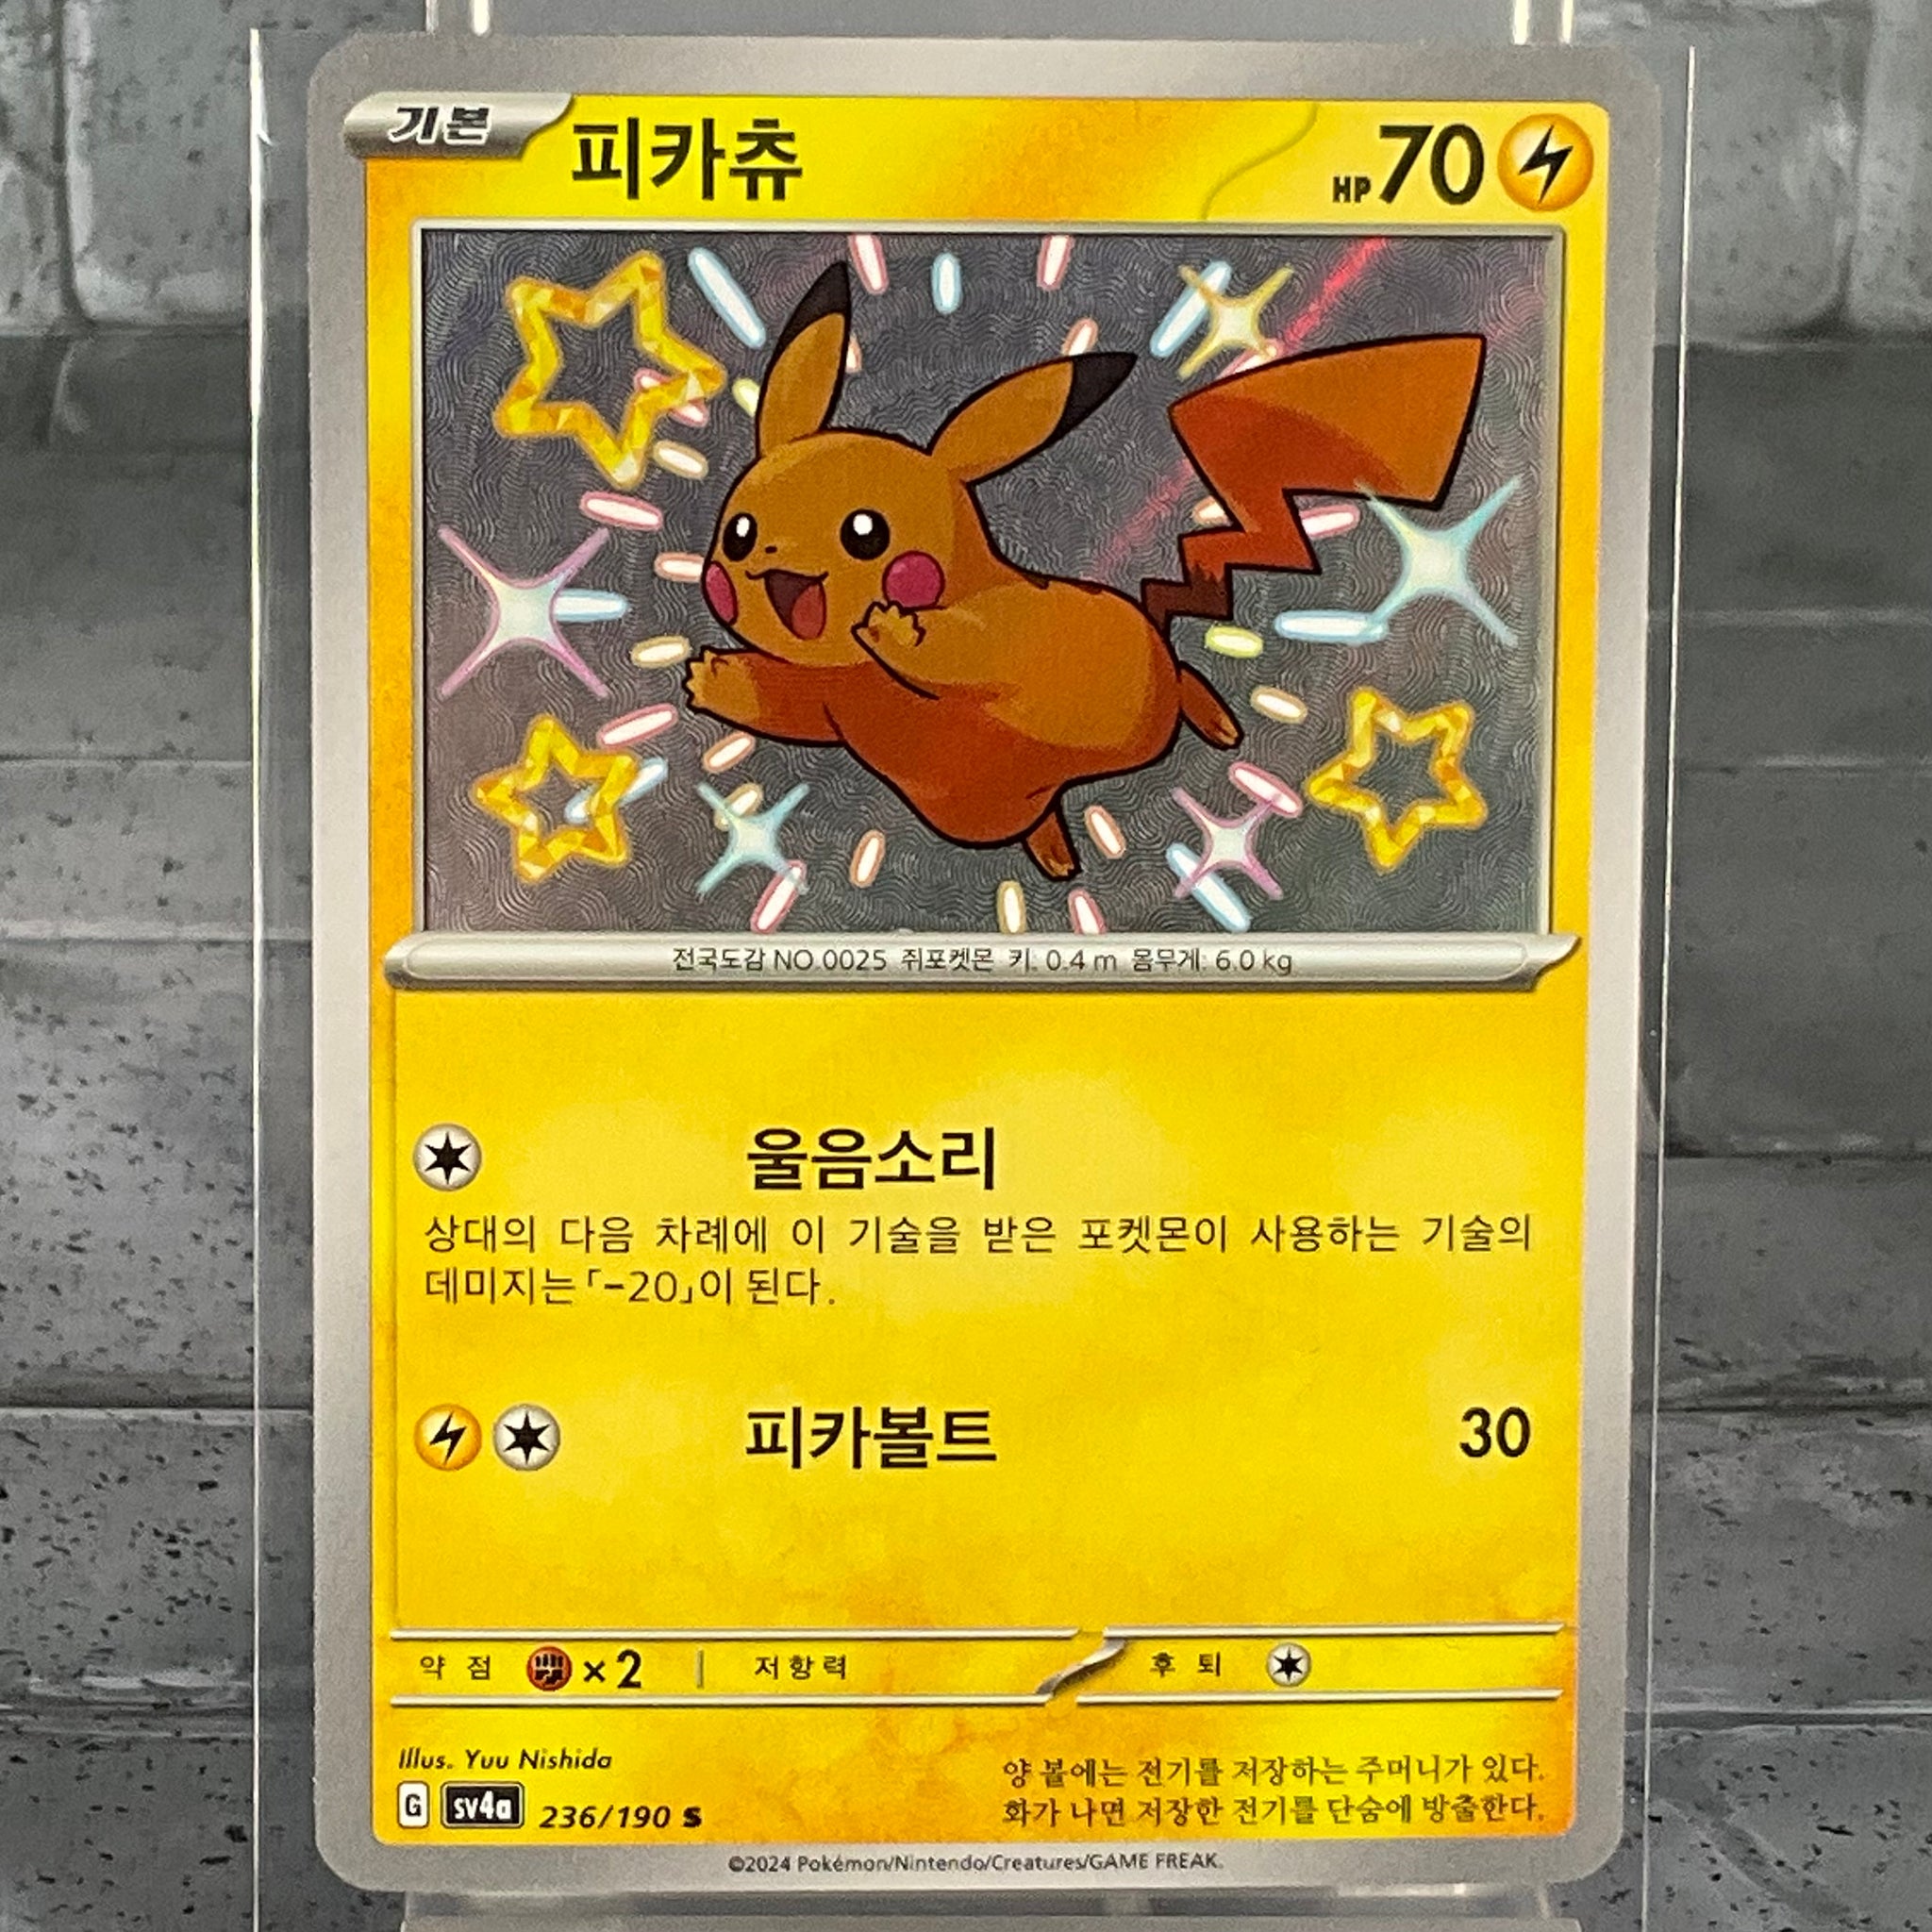 Shiny Pikachu - 236/190 (Korean)